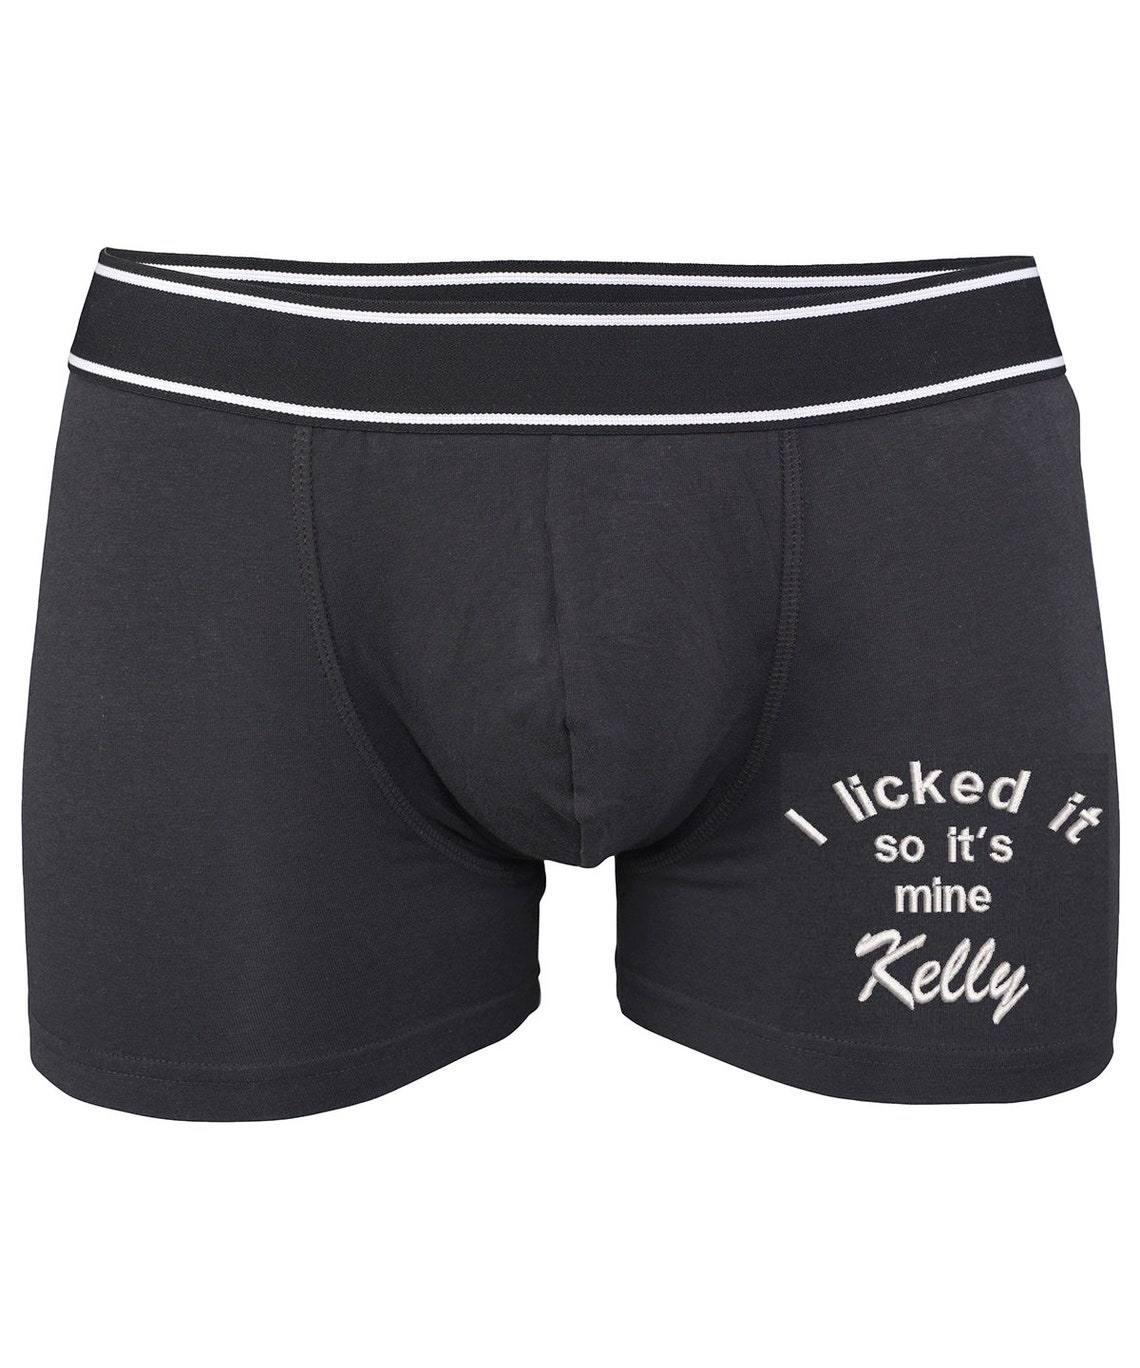 Personalised boxer shorts for him on Christmas gift ideas I | Etsy